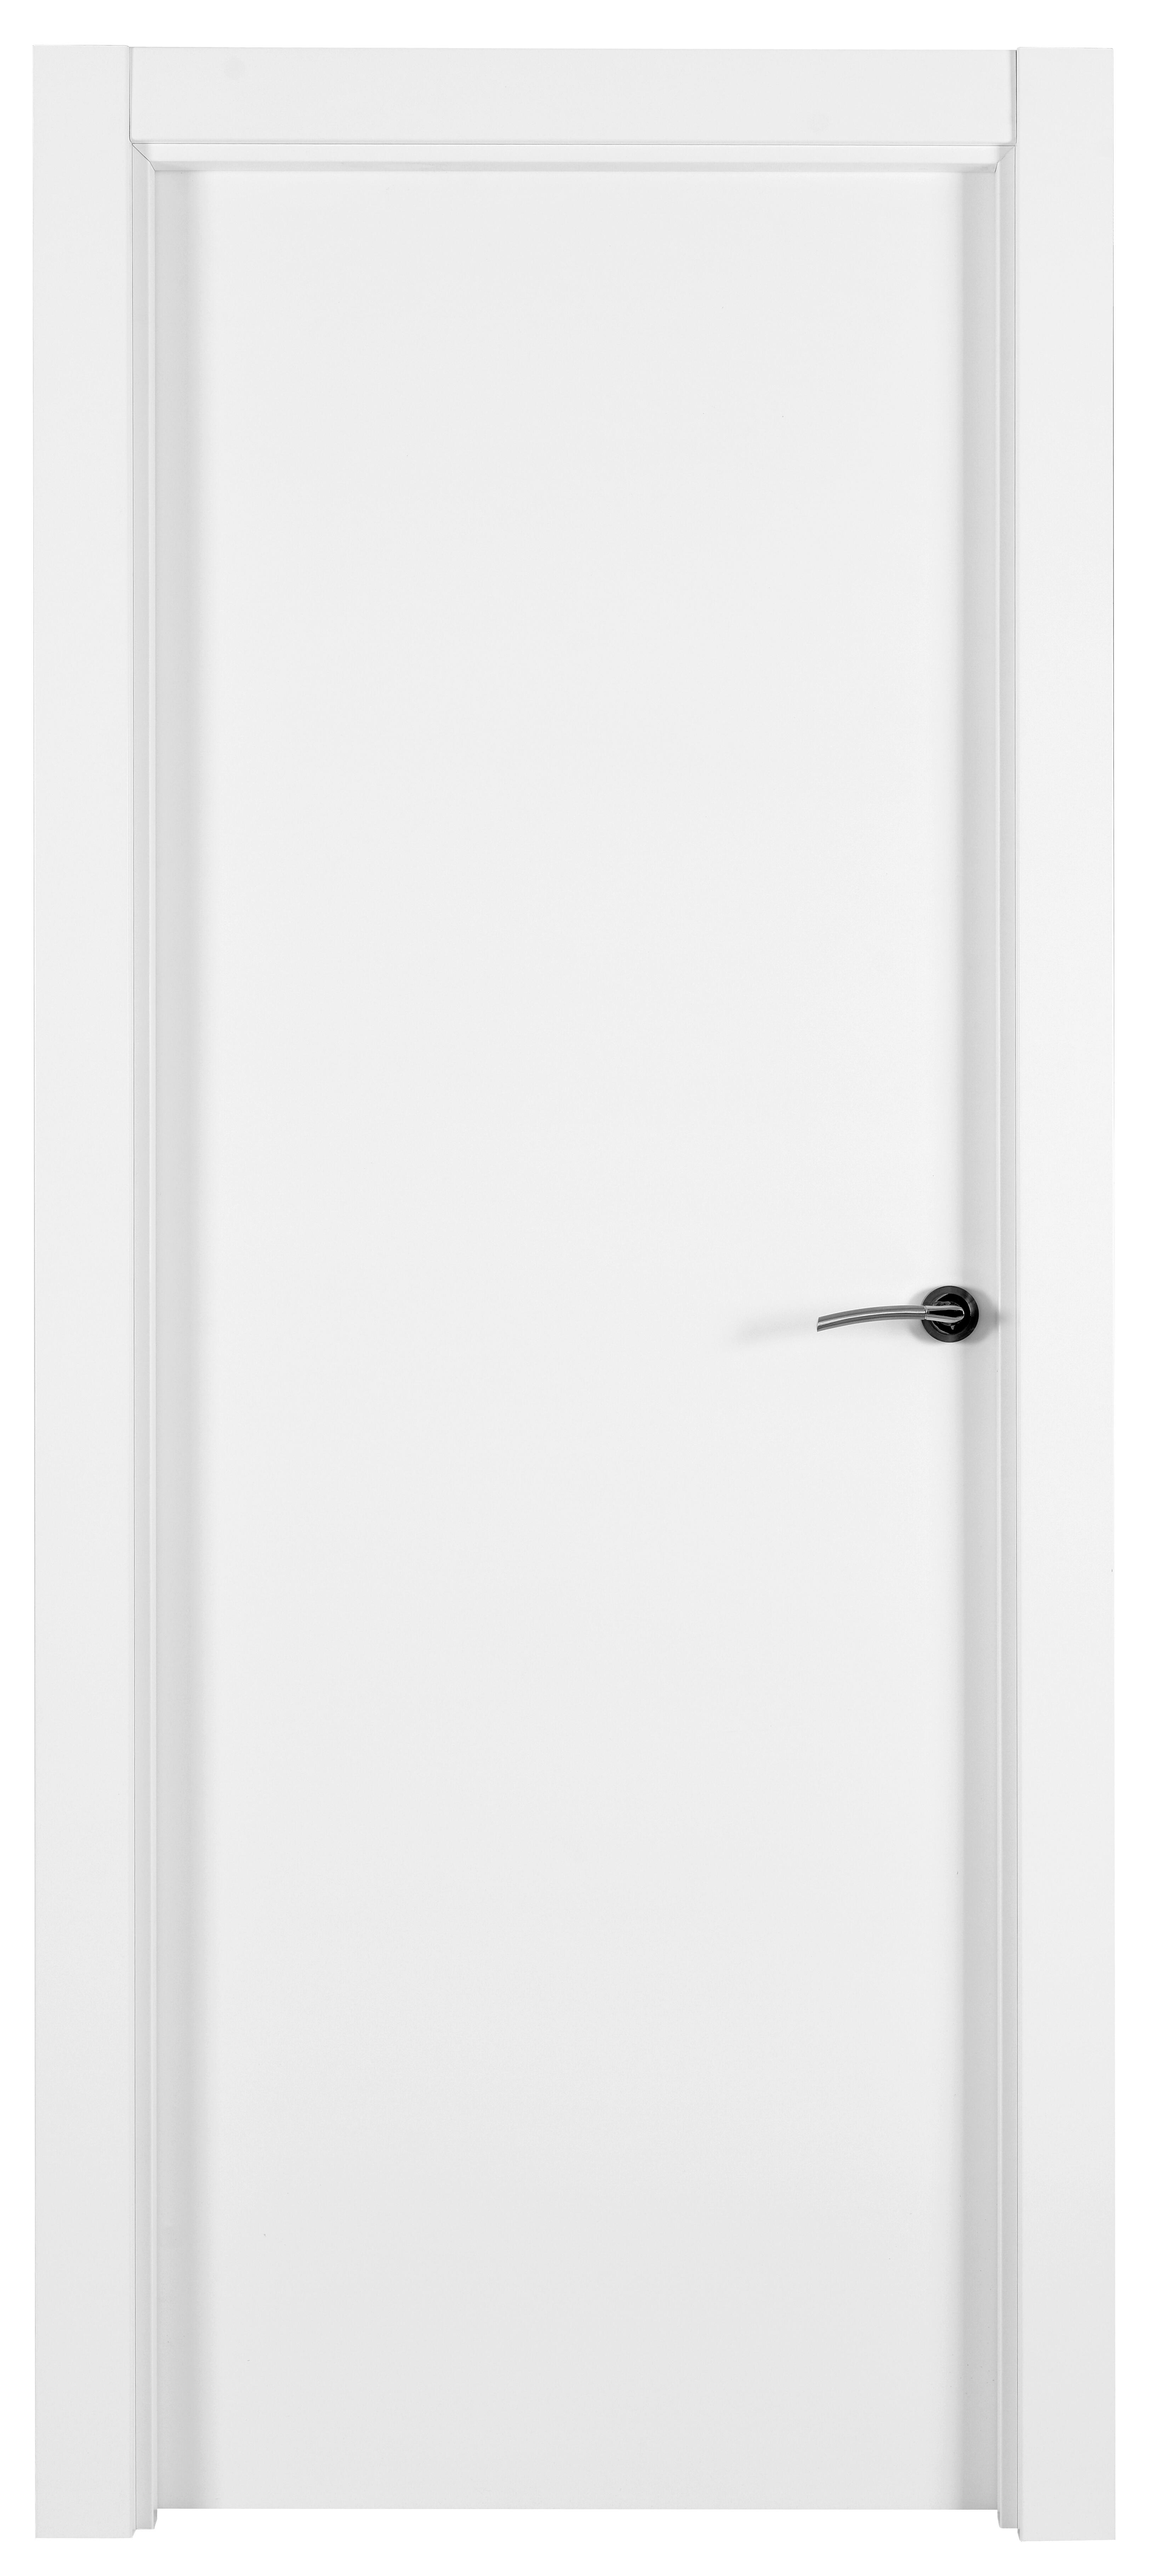 Puerta lyon blanco apertura izquierda 82.5cm